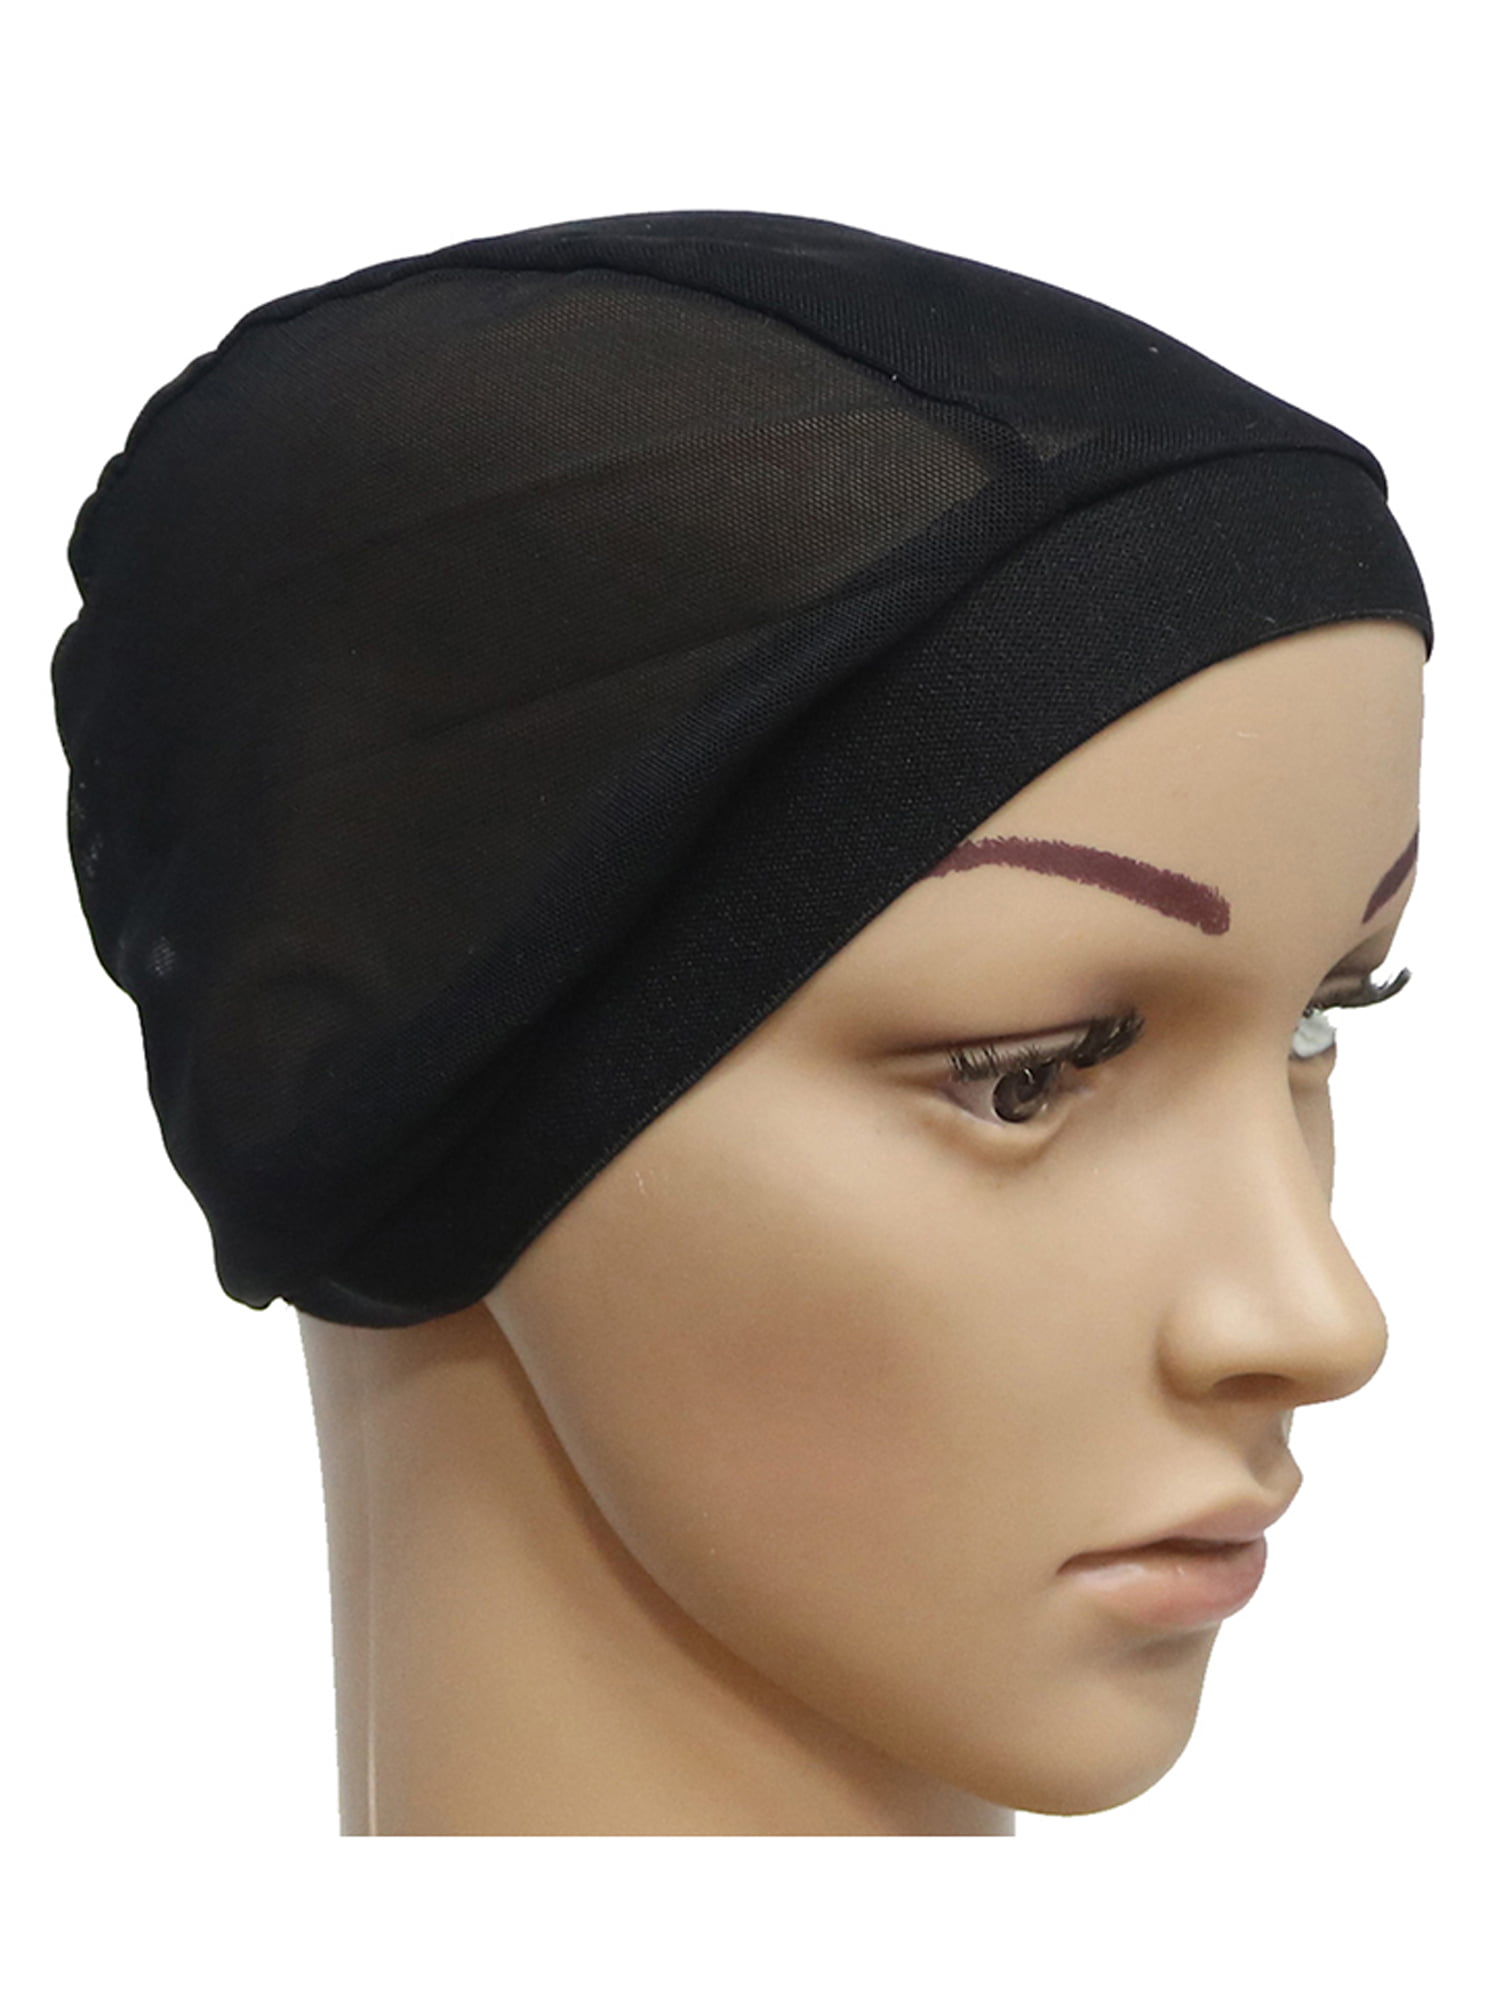 Underscarf Muslim Print Headwear Inner Cap Turban Beanie Islamic Women Hat Hijab 